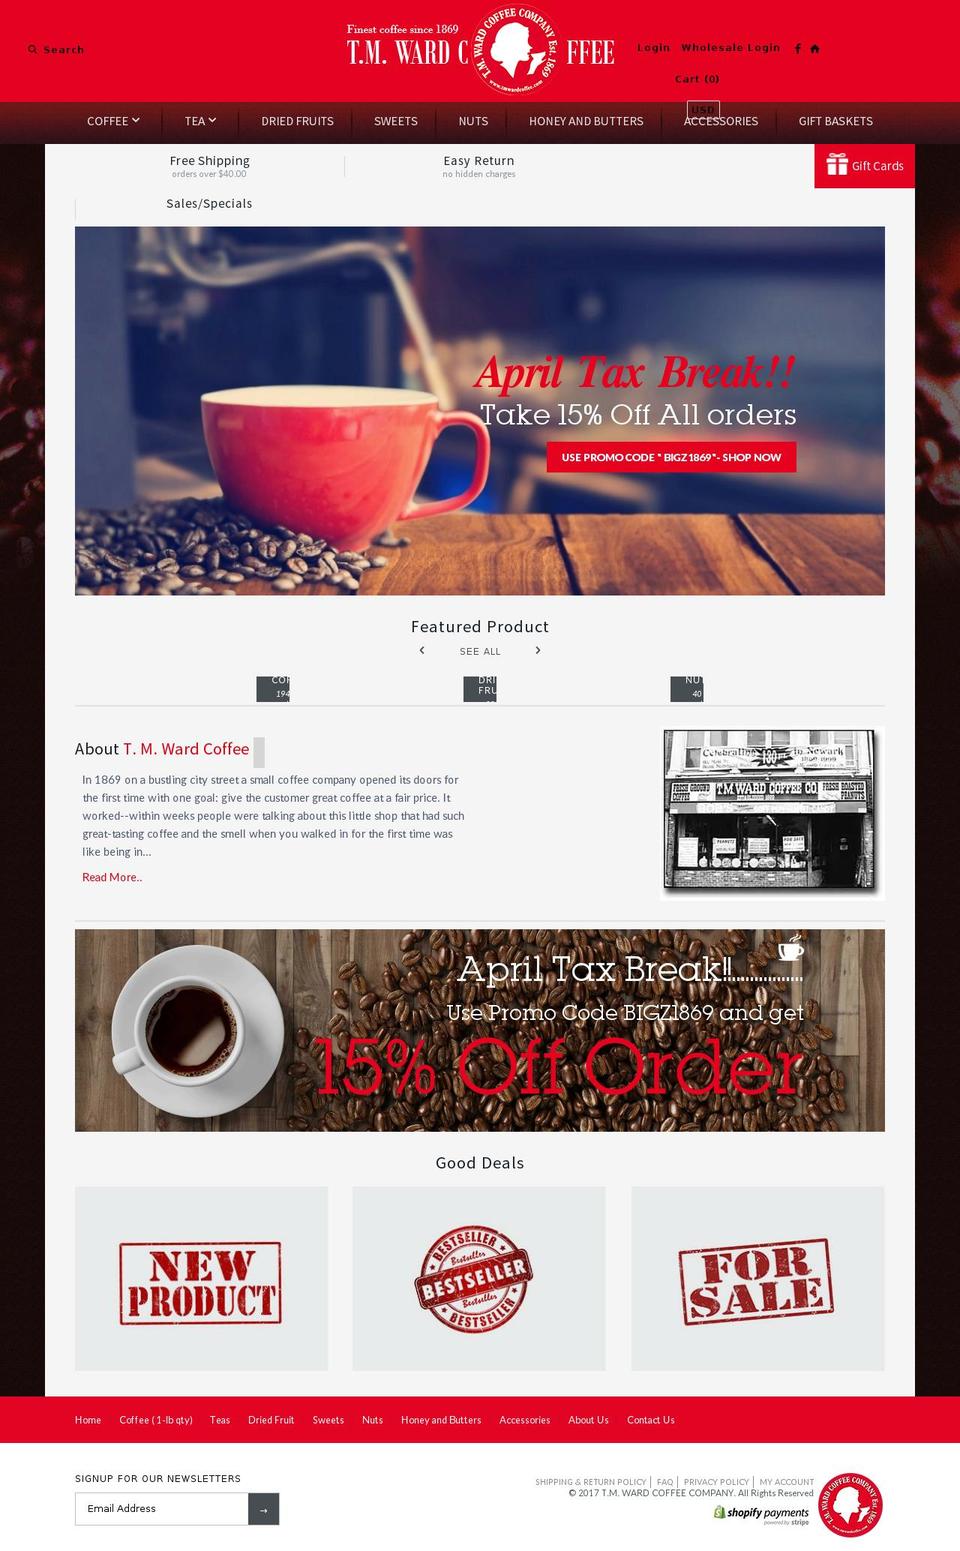 Providence Shopify theme site example tmwardcoffee.com